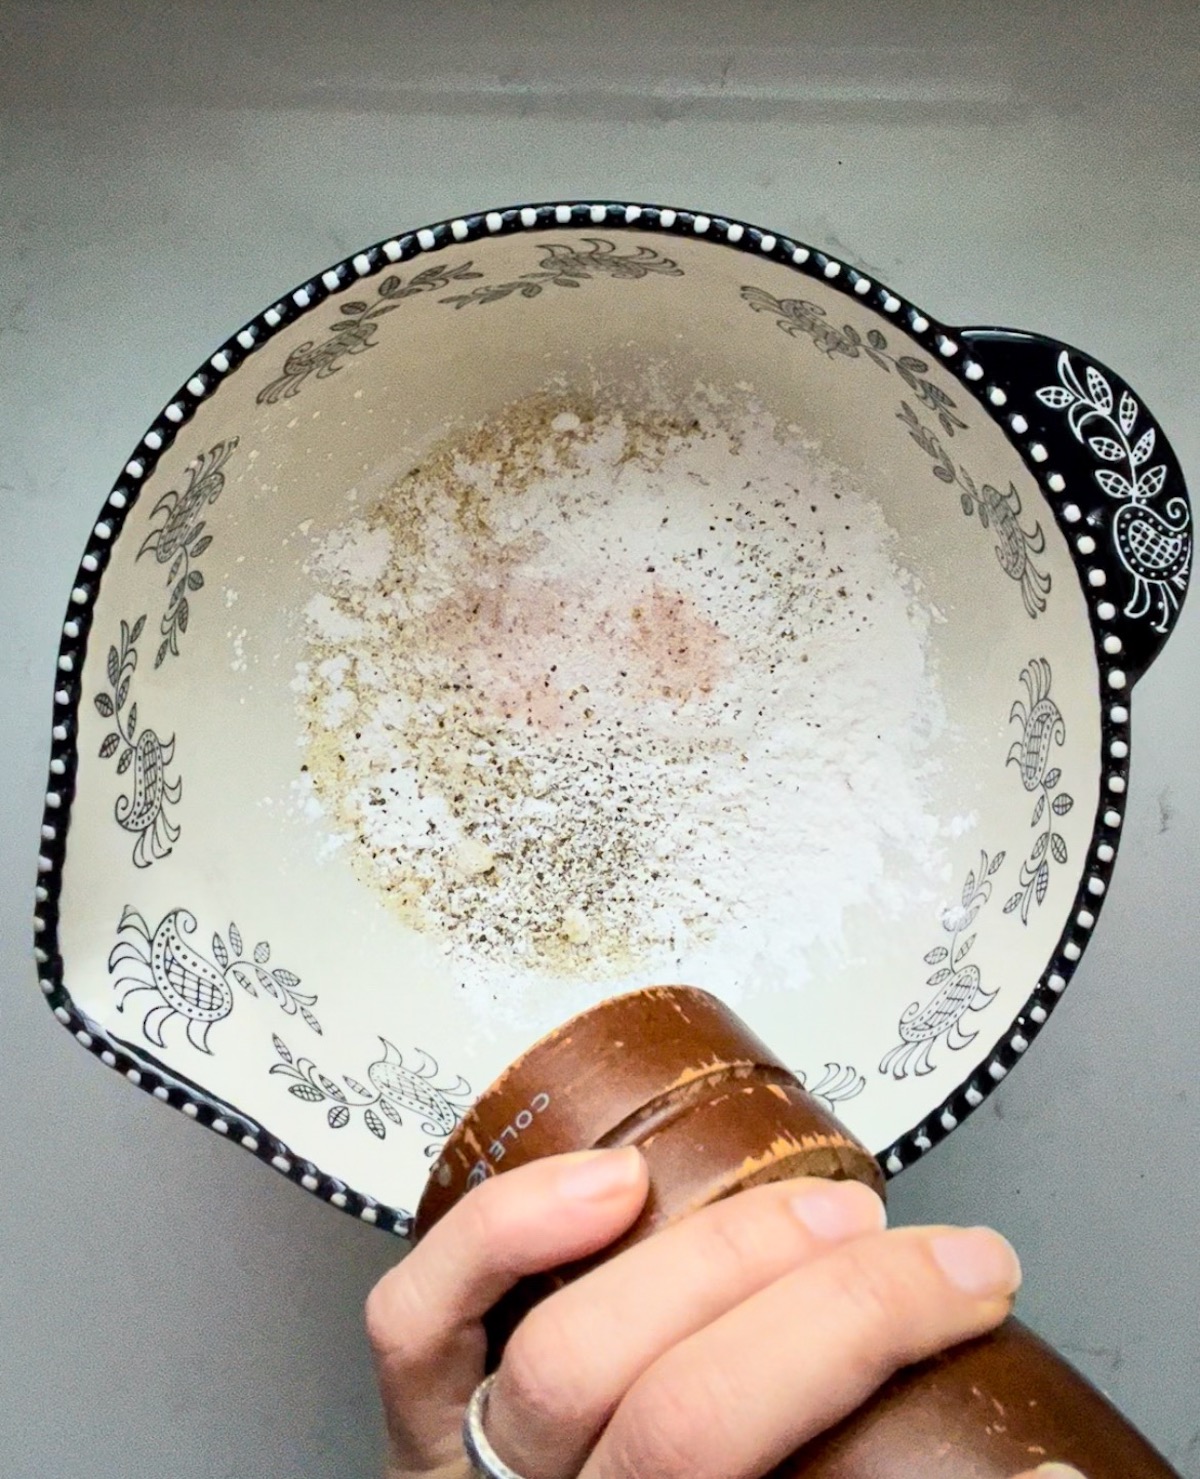 coconut flour, arrowroot flour, salt, and pepper in a bowl